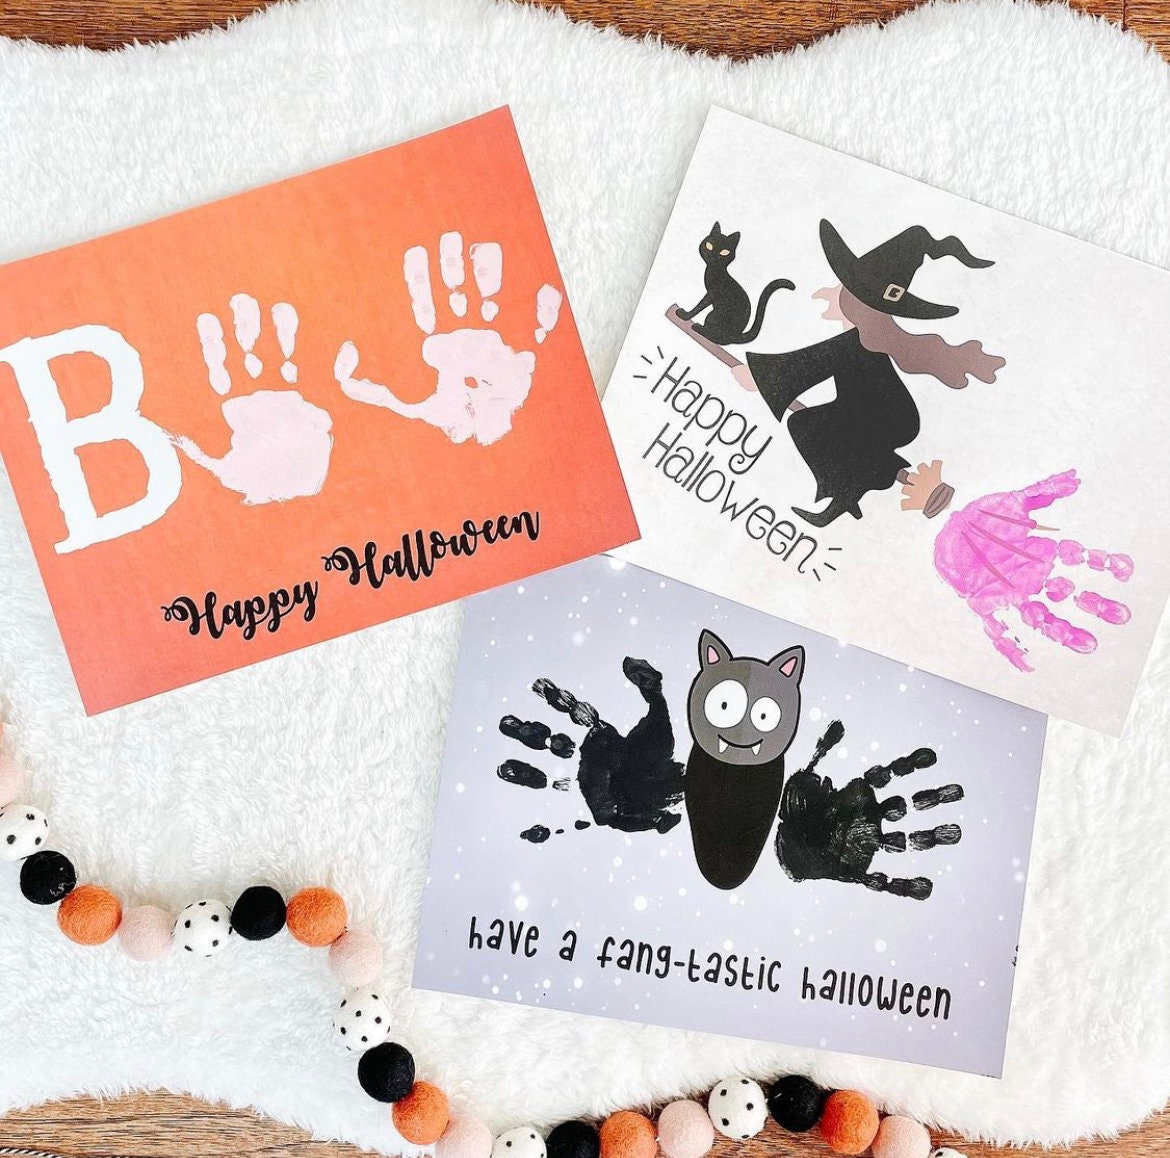 Boo Halloween Keepsake / Handprint Art Craft / Ghost / Happy Halloween / Baby Toddler Kid / Card Print DIY Sign 0026